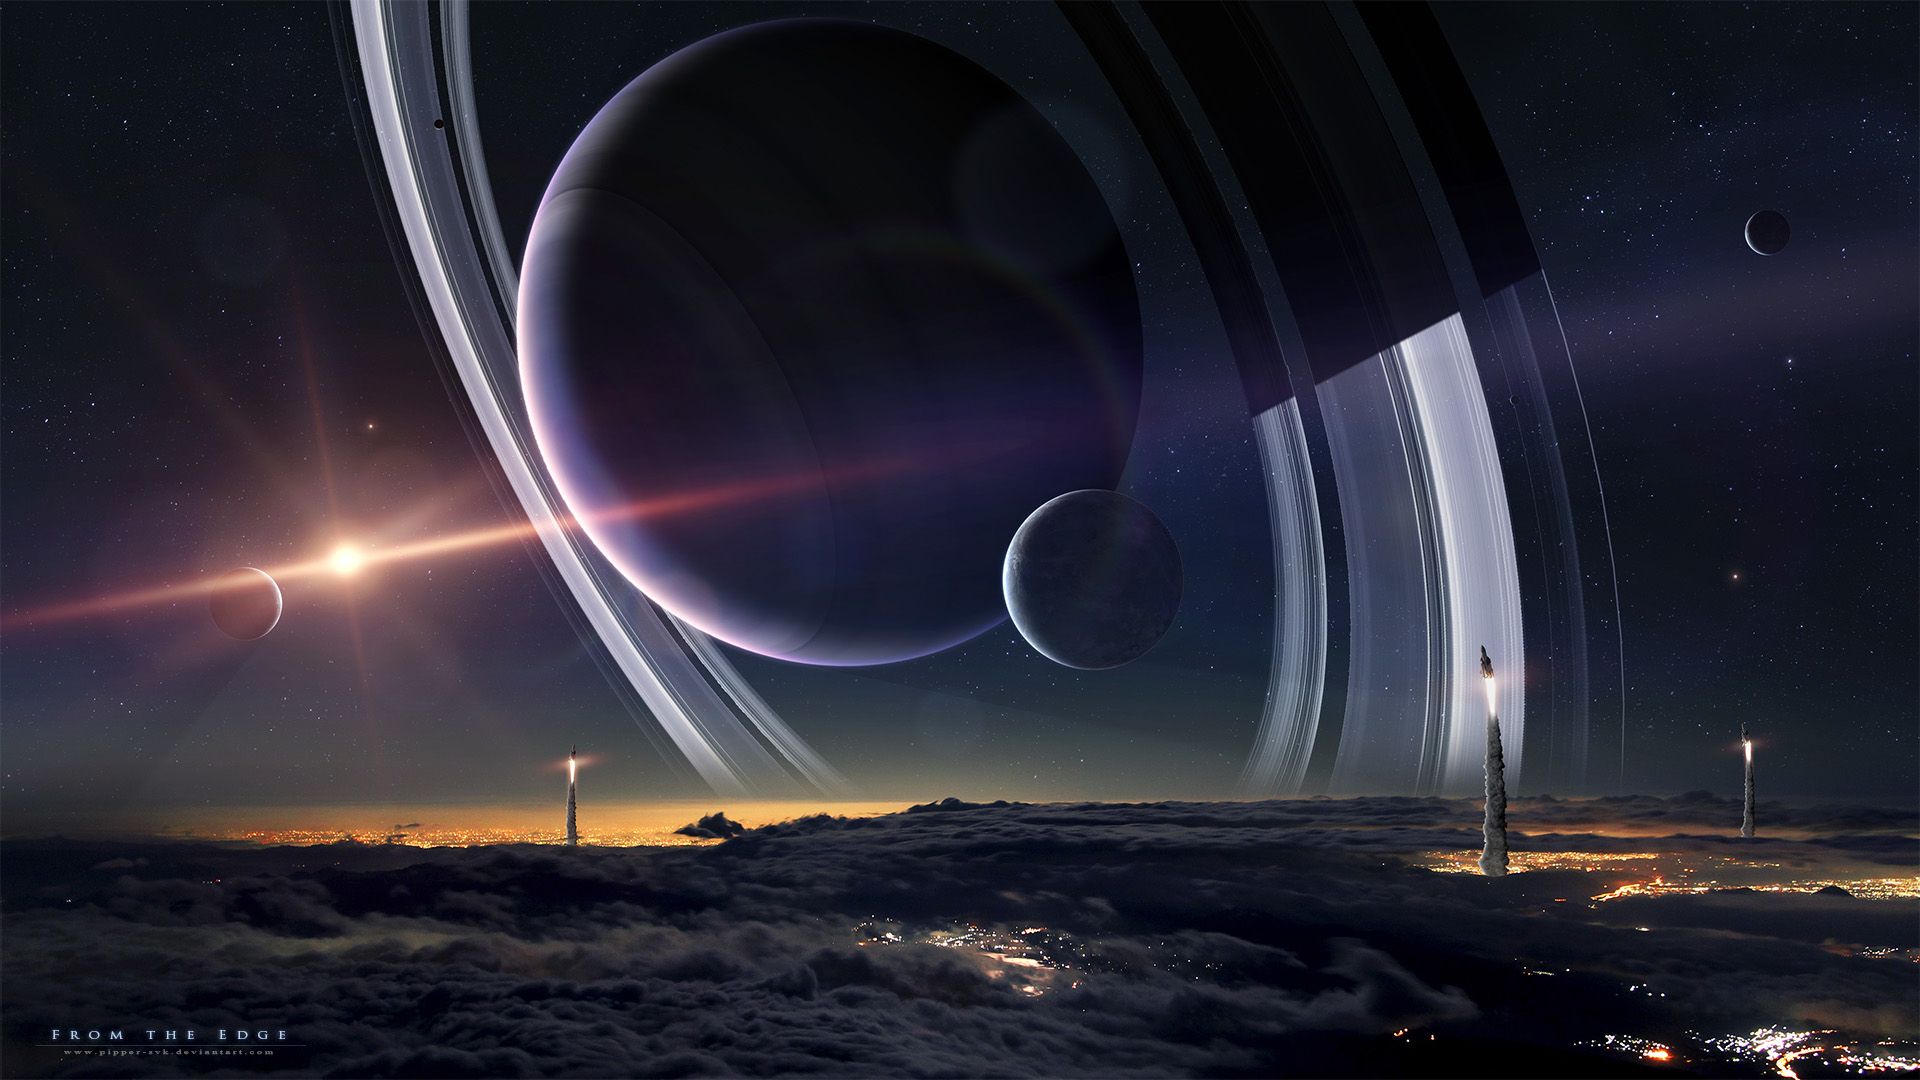 Space Planetary Rings Digital Art Wallpapers